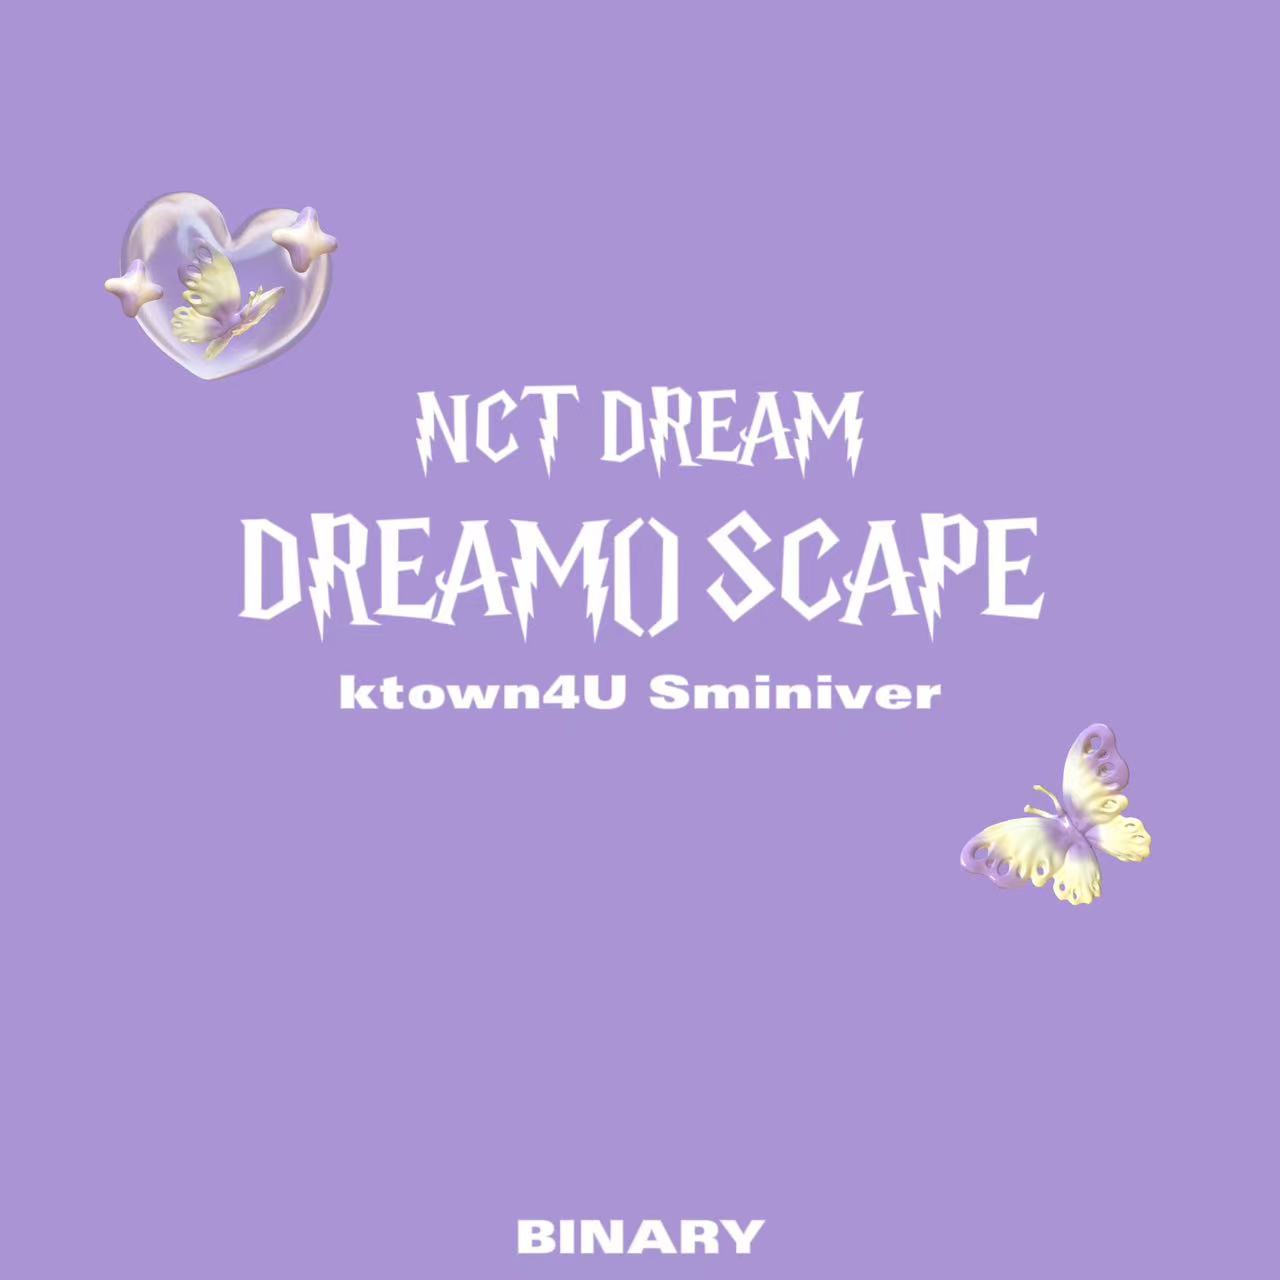 [全款 裸专] [7CD 套装] NCT DREAM - [DREAM( )SCAPE] (SMini Ver.) (Smart Album)_Binary_诺民博物志